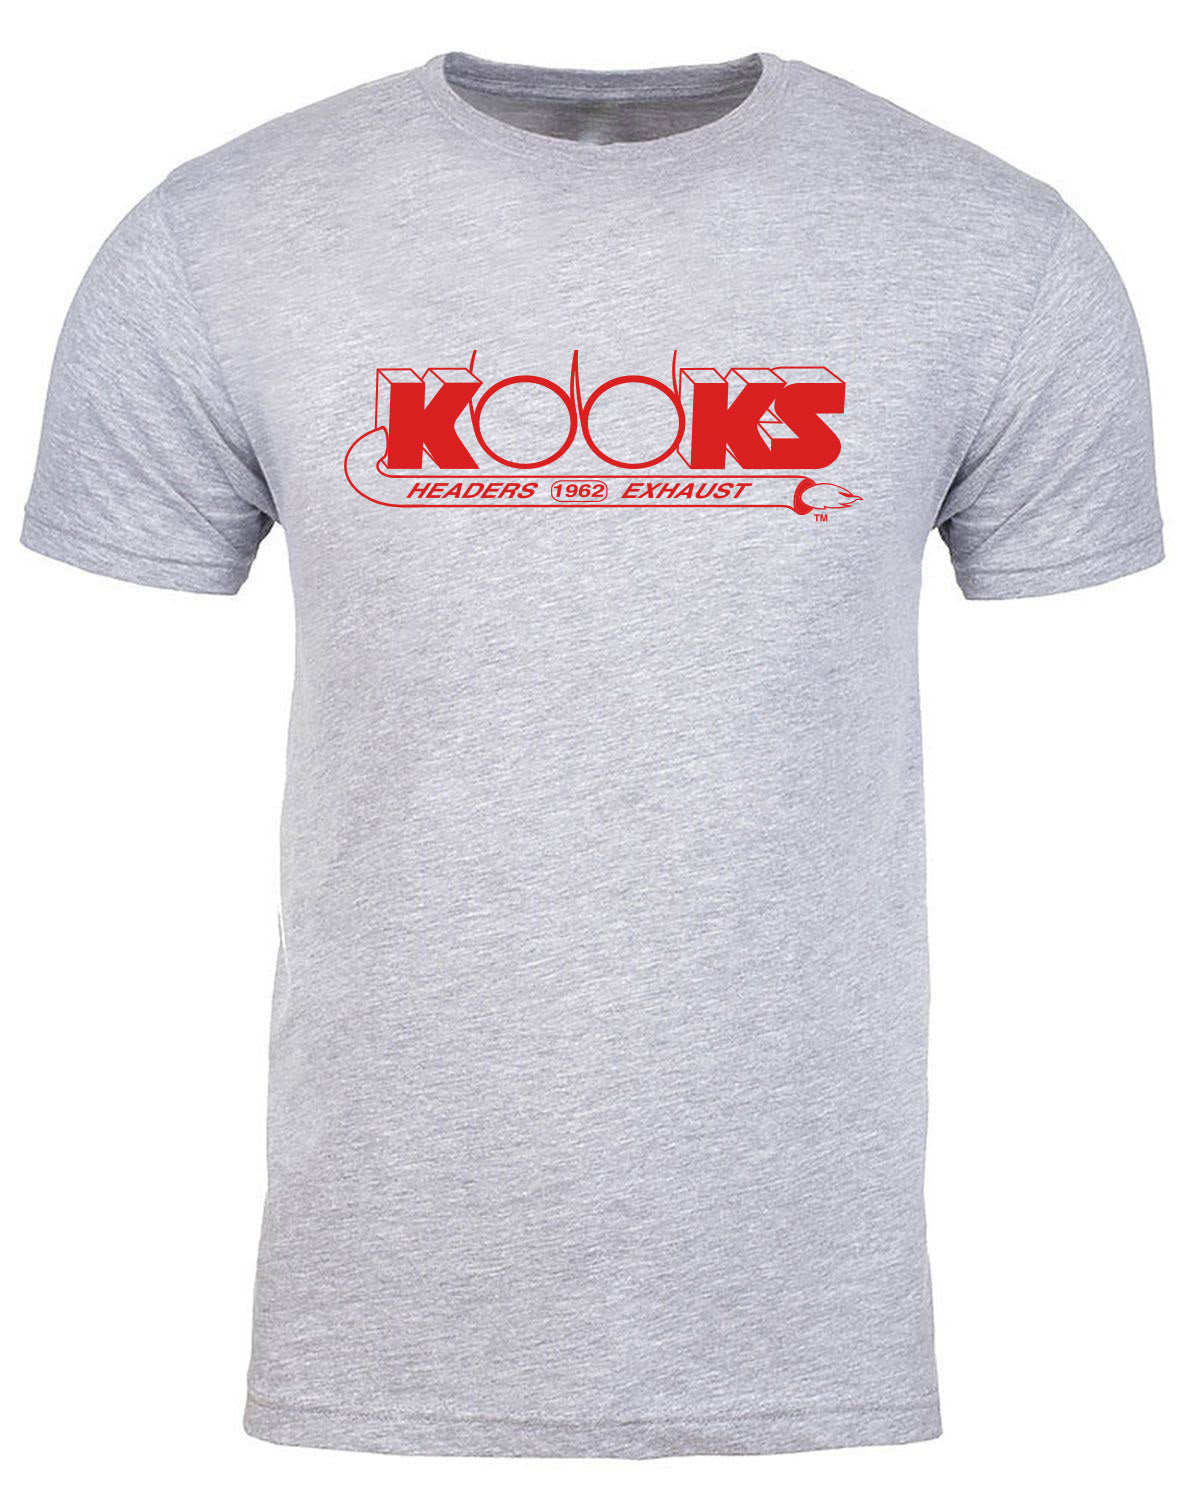 Kooks Custom Headers T-Shirt TS-100648-05